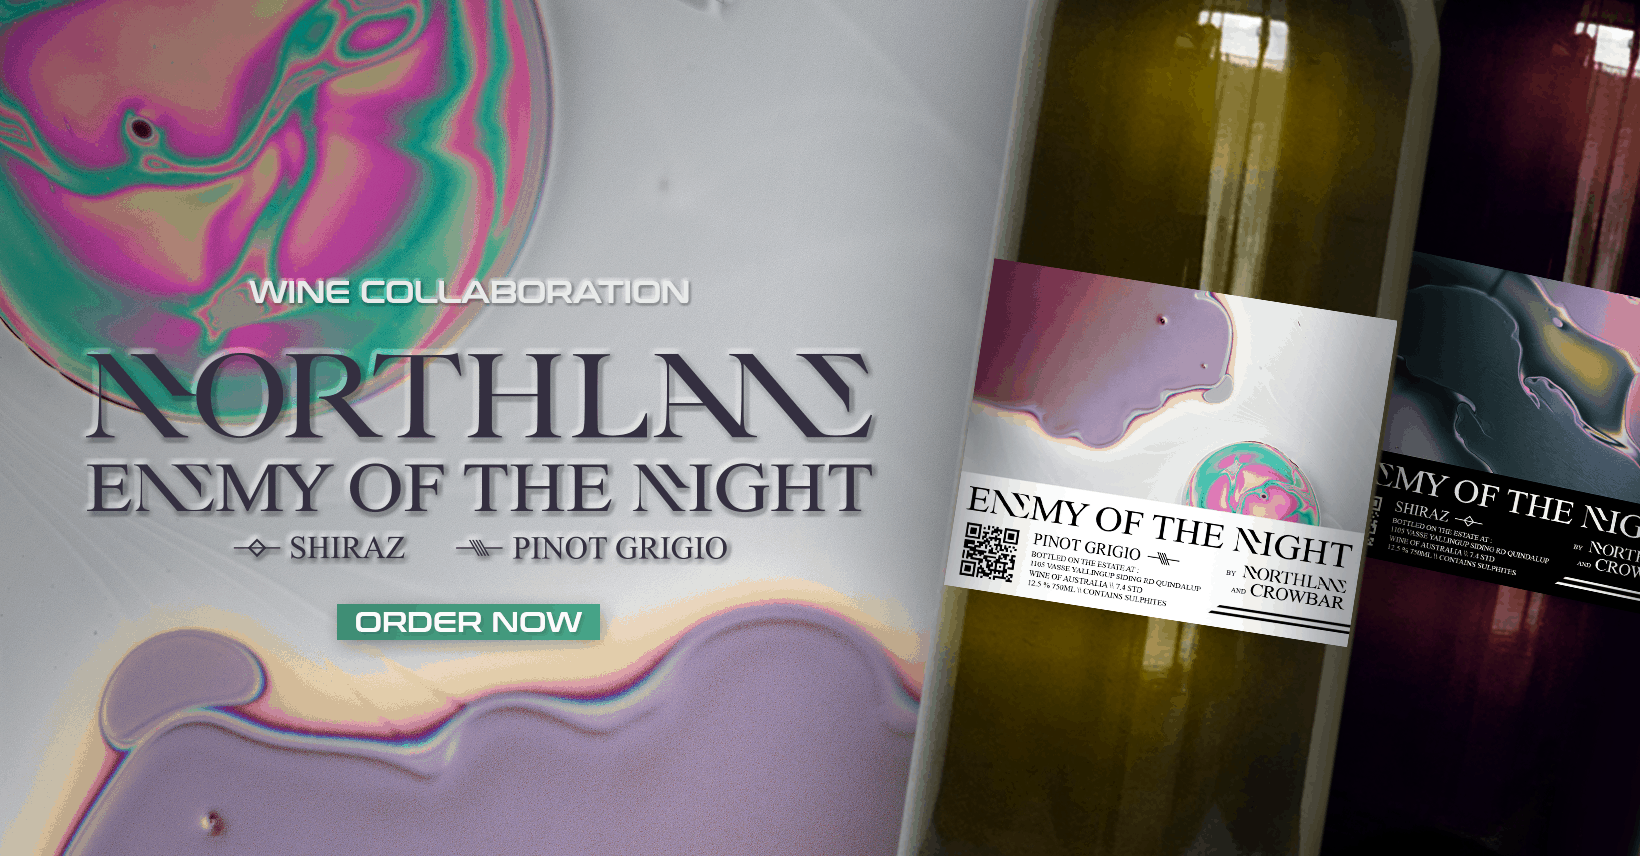 Crowbar Wine Northlane Collaboration Shiraz Pinot Grigio Enemy Of The Night